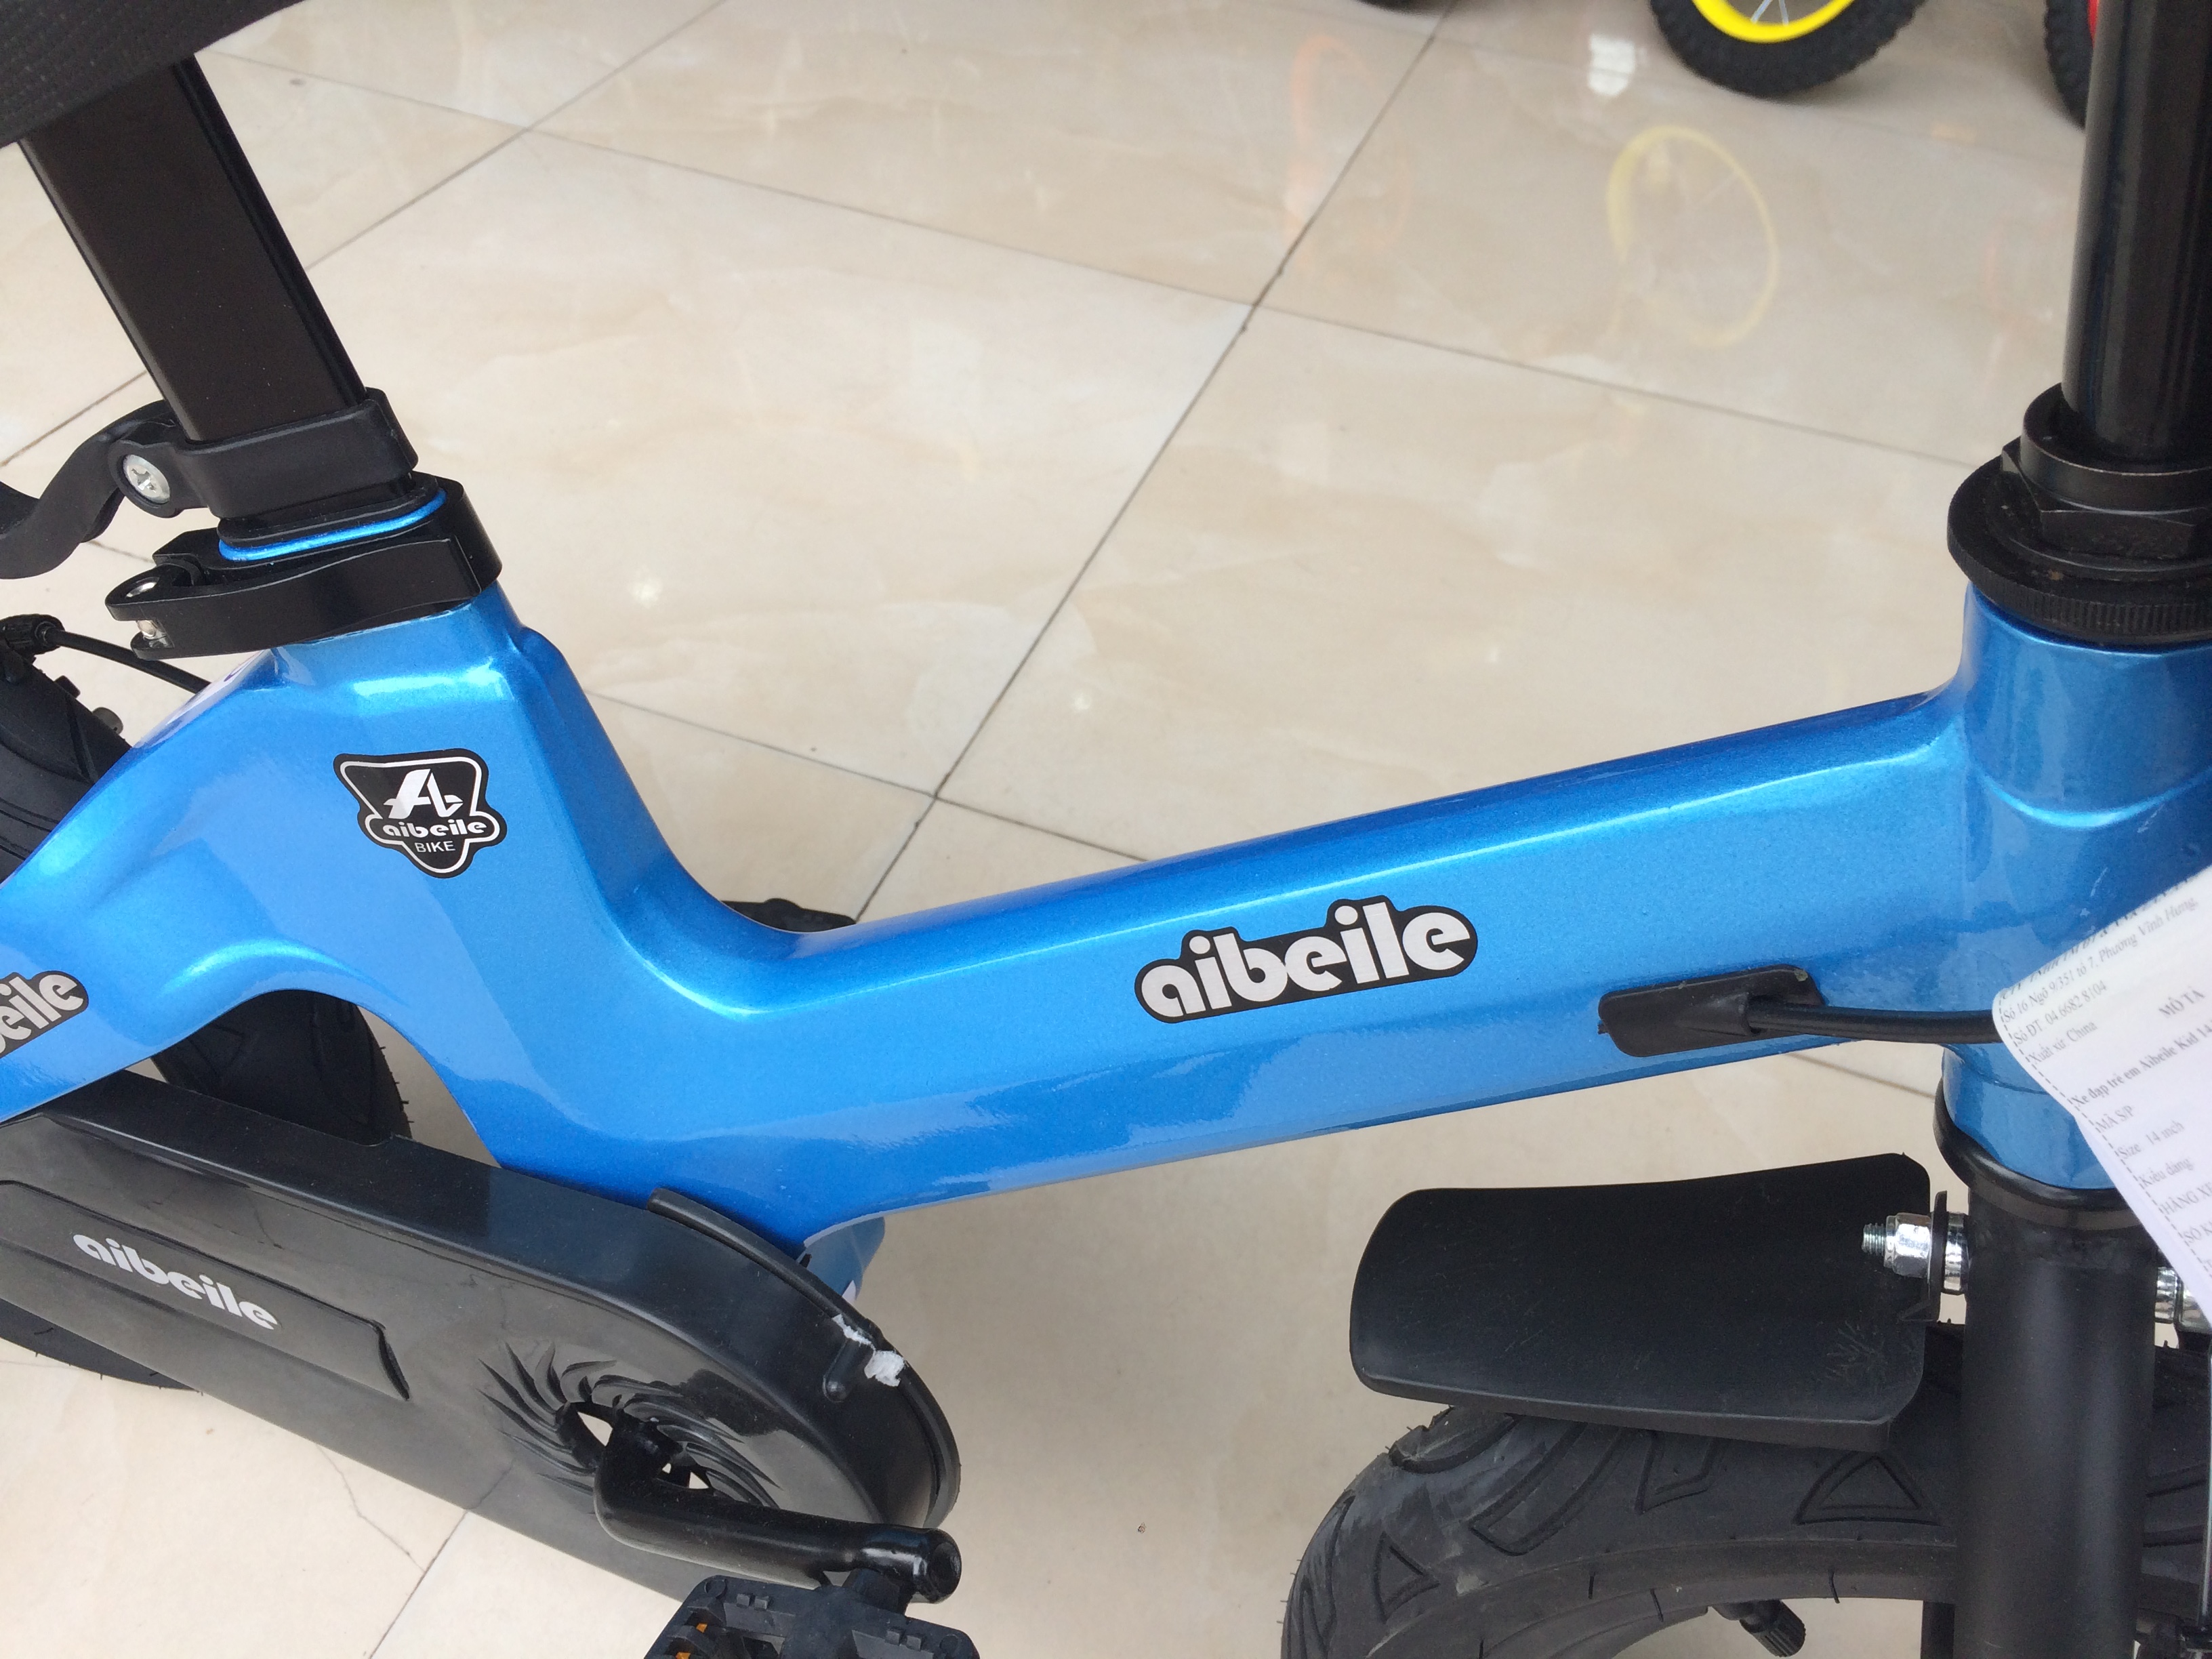 Xe đạp trẻ em Aibeile Kid 14 Blue